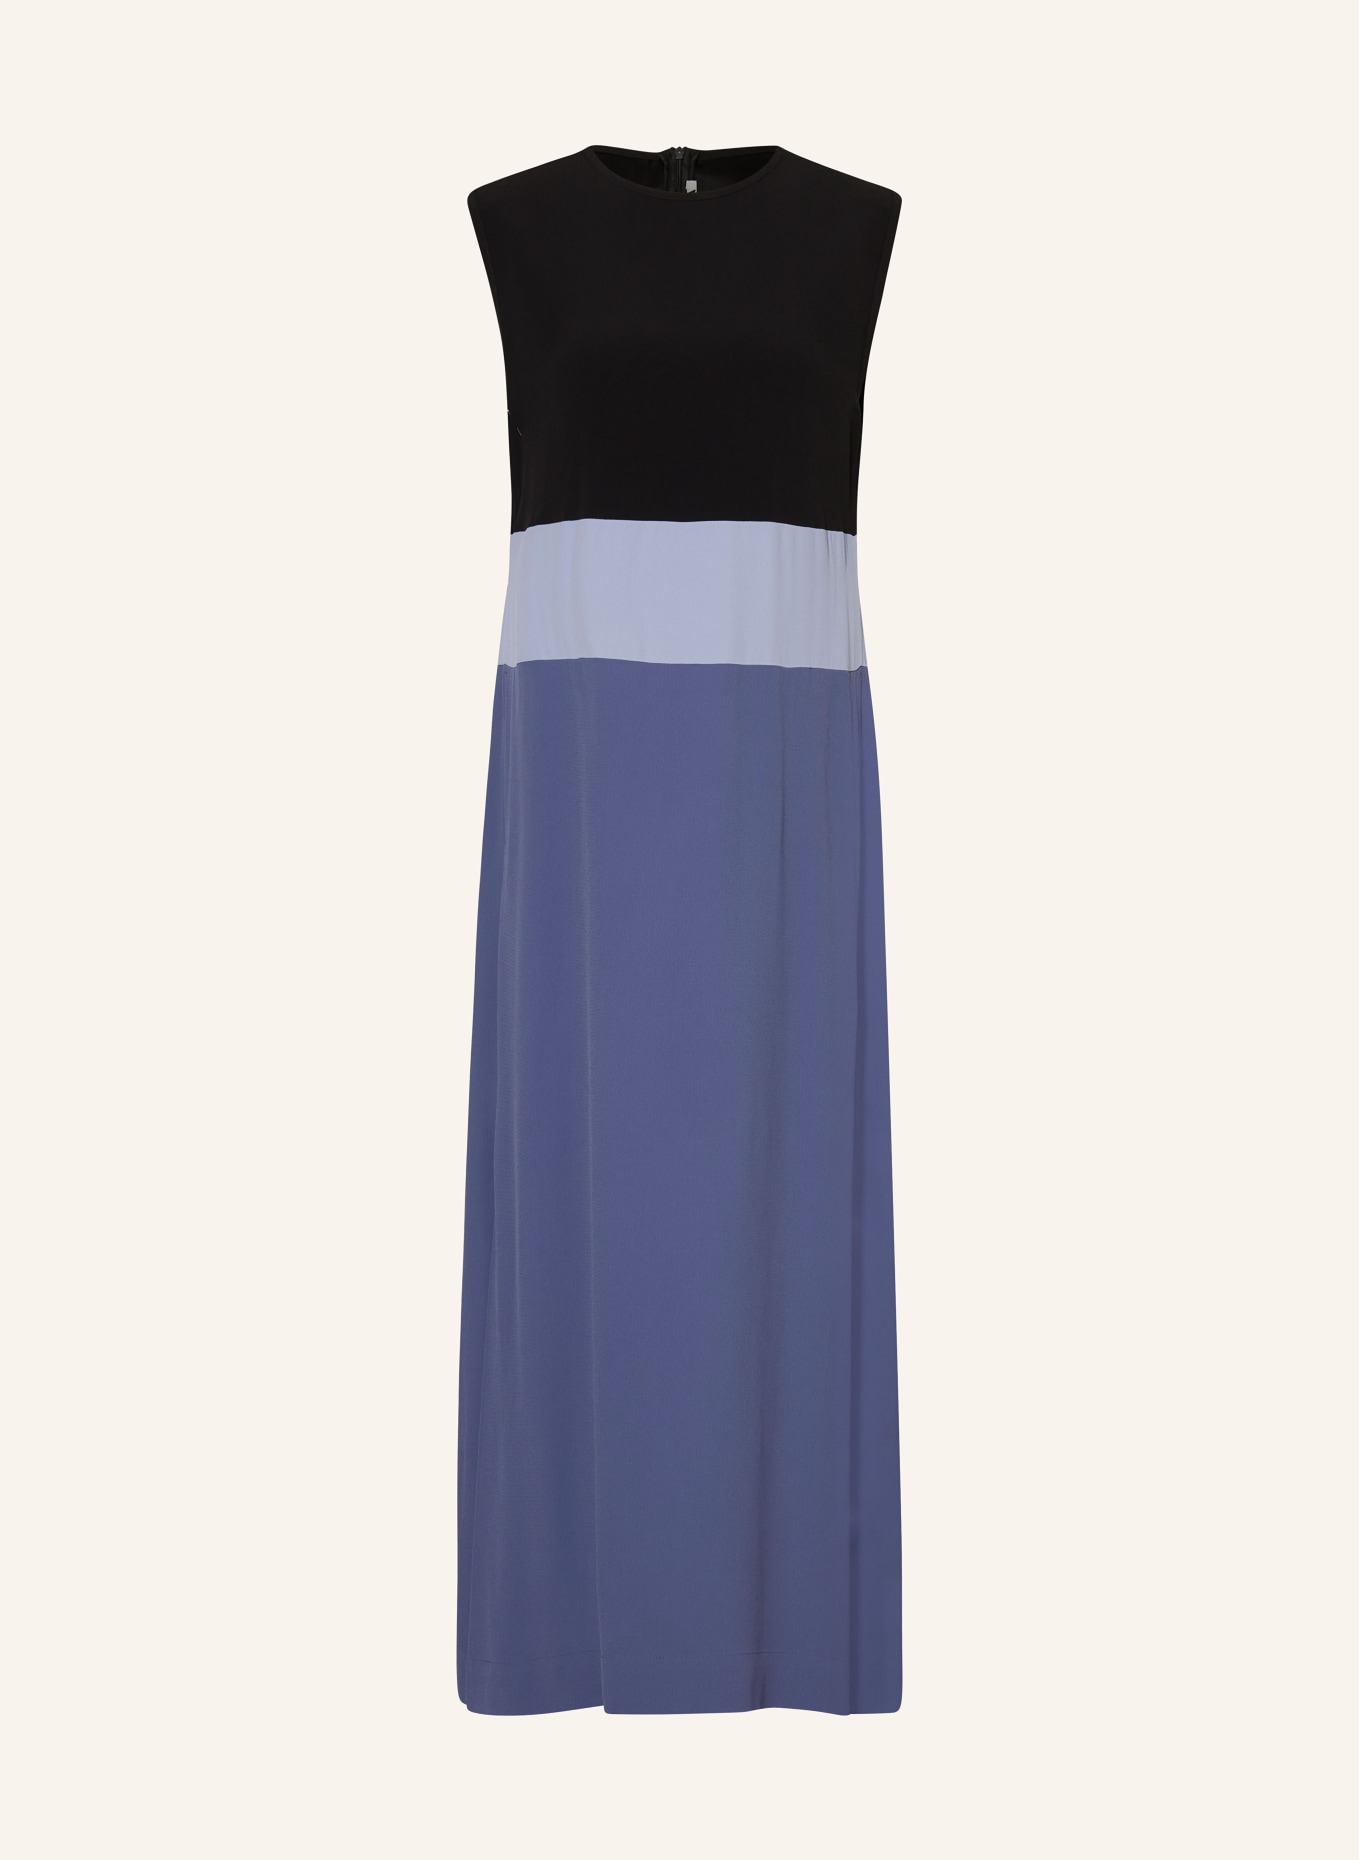 VANILIA Kleid, Farbe: SCHWARZ/ HELLBLAU/ BLAU (Bild 1)